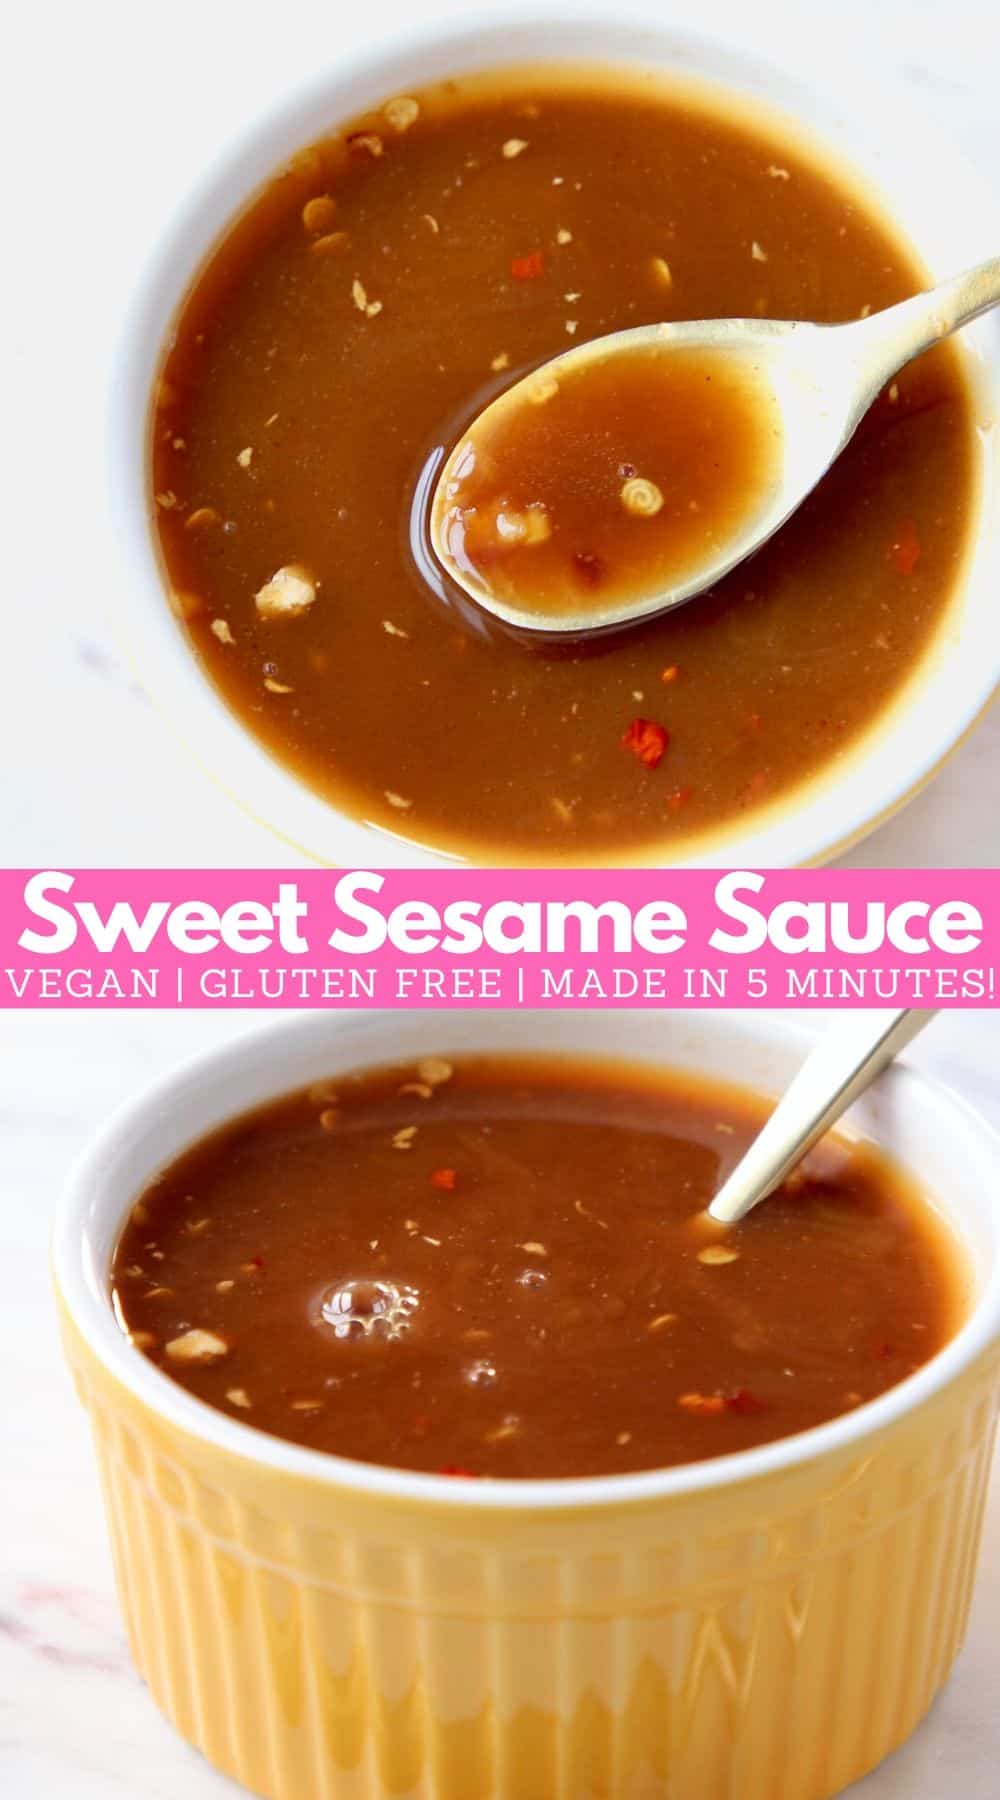 Sweet Sesame Sauce 6 